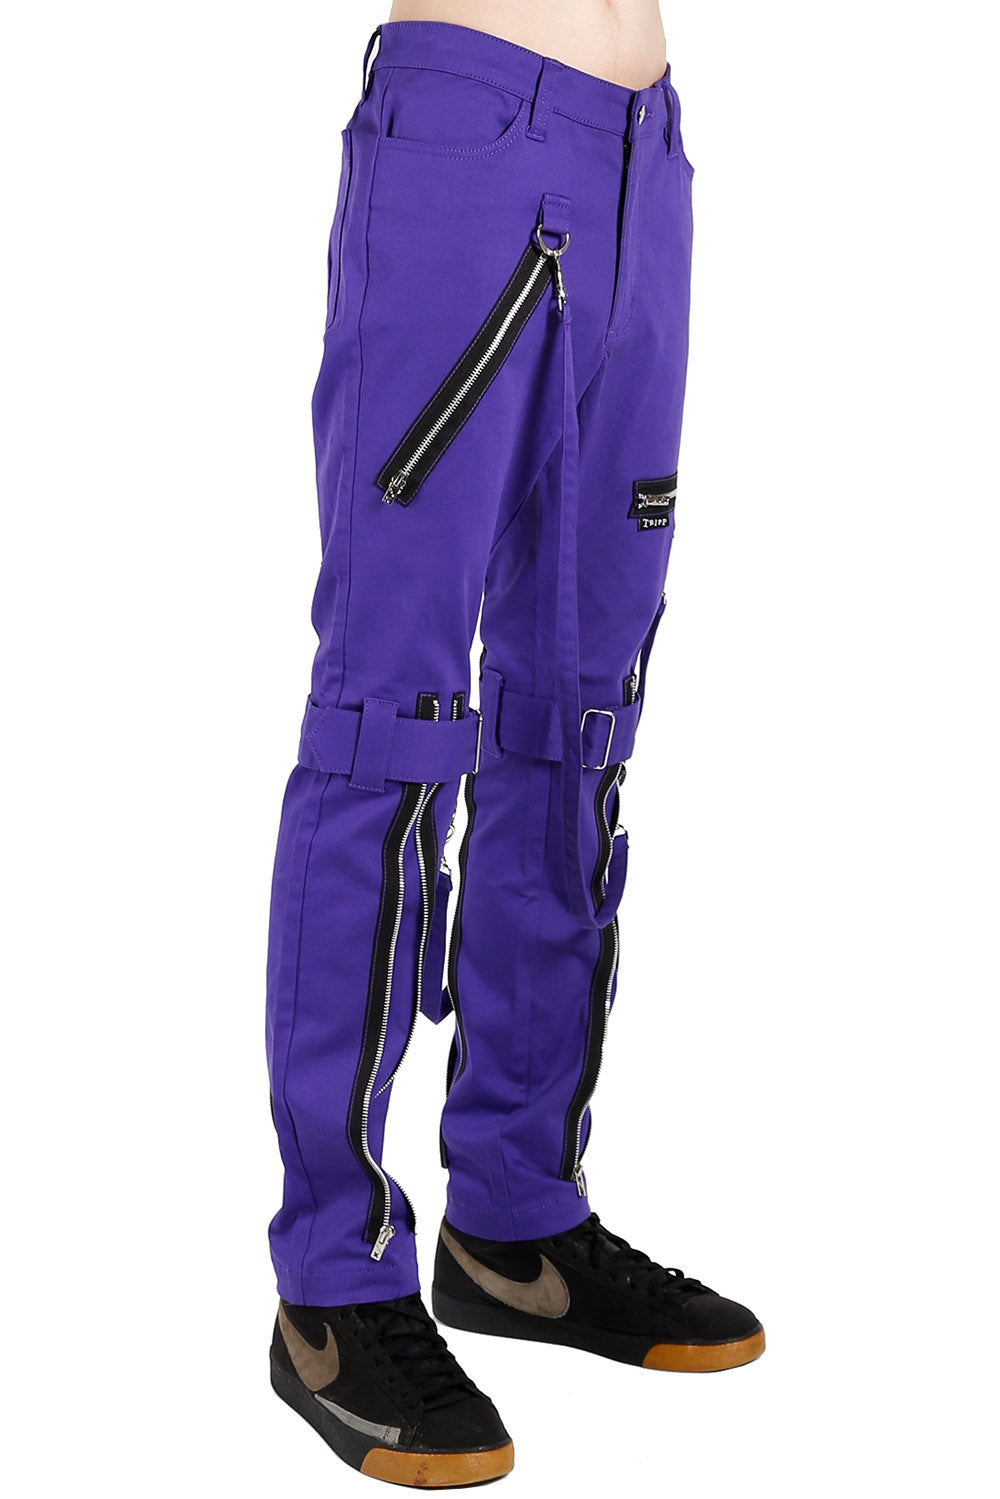 mens purple rave pants